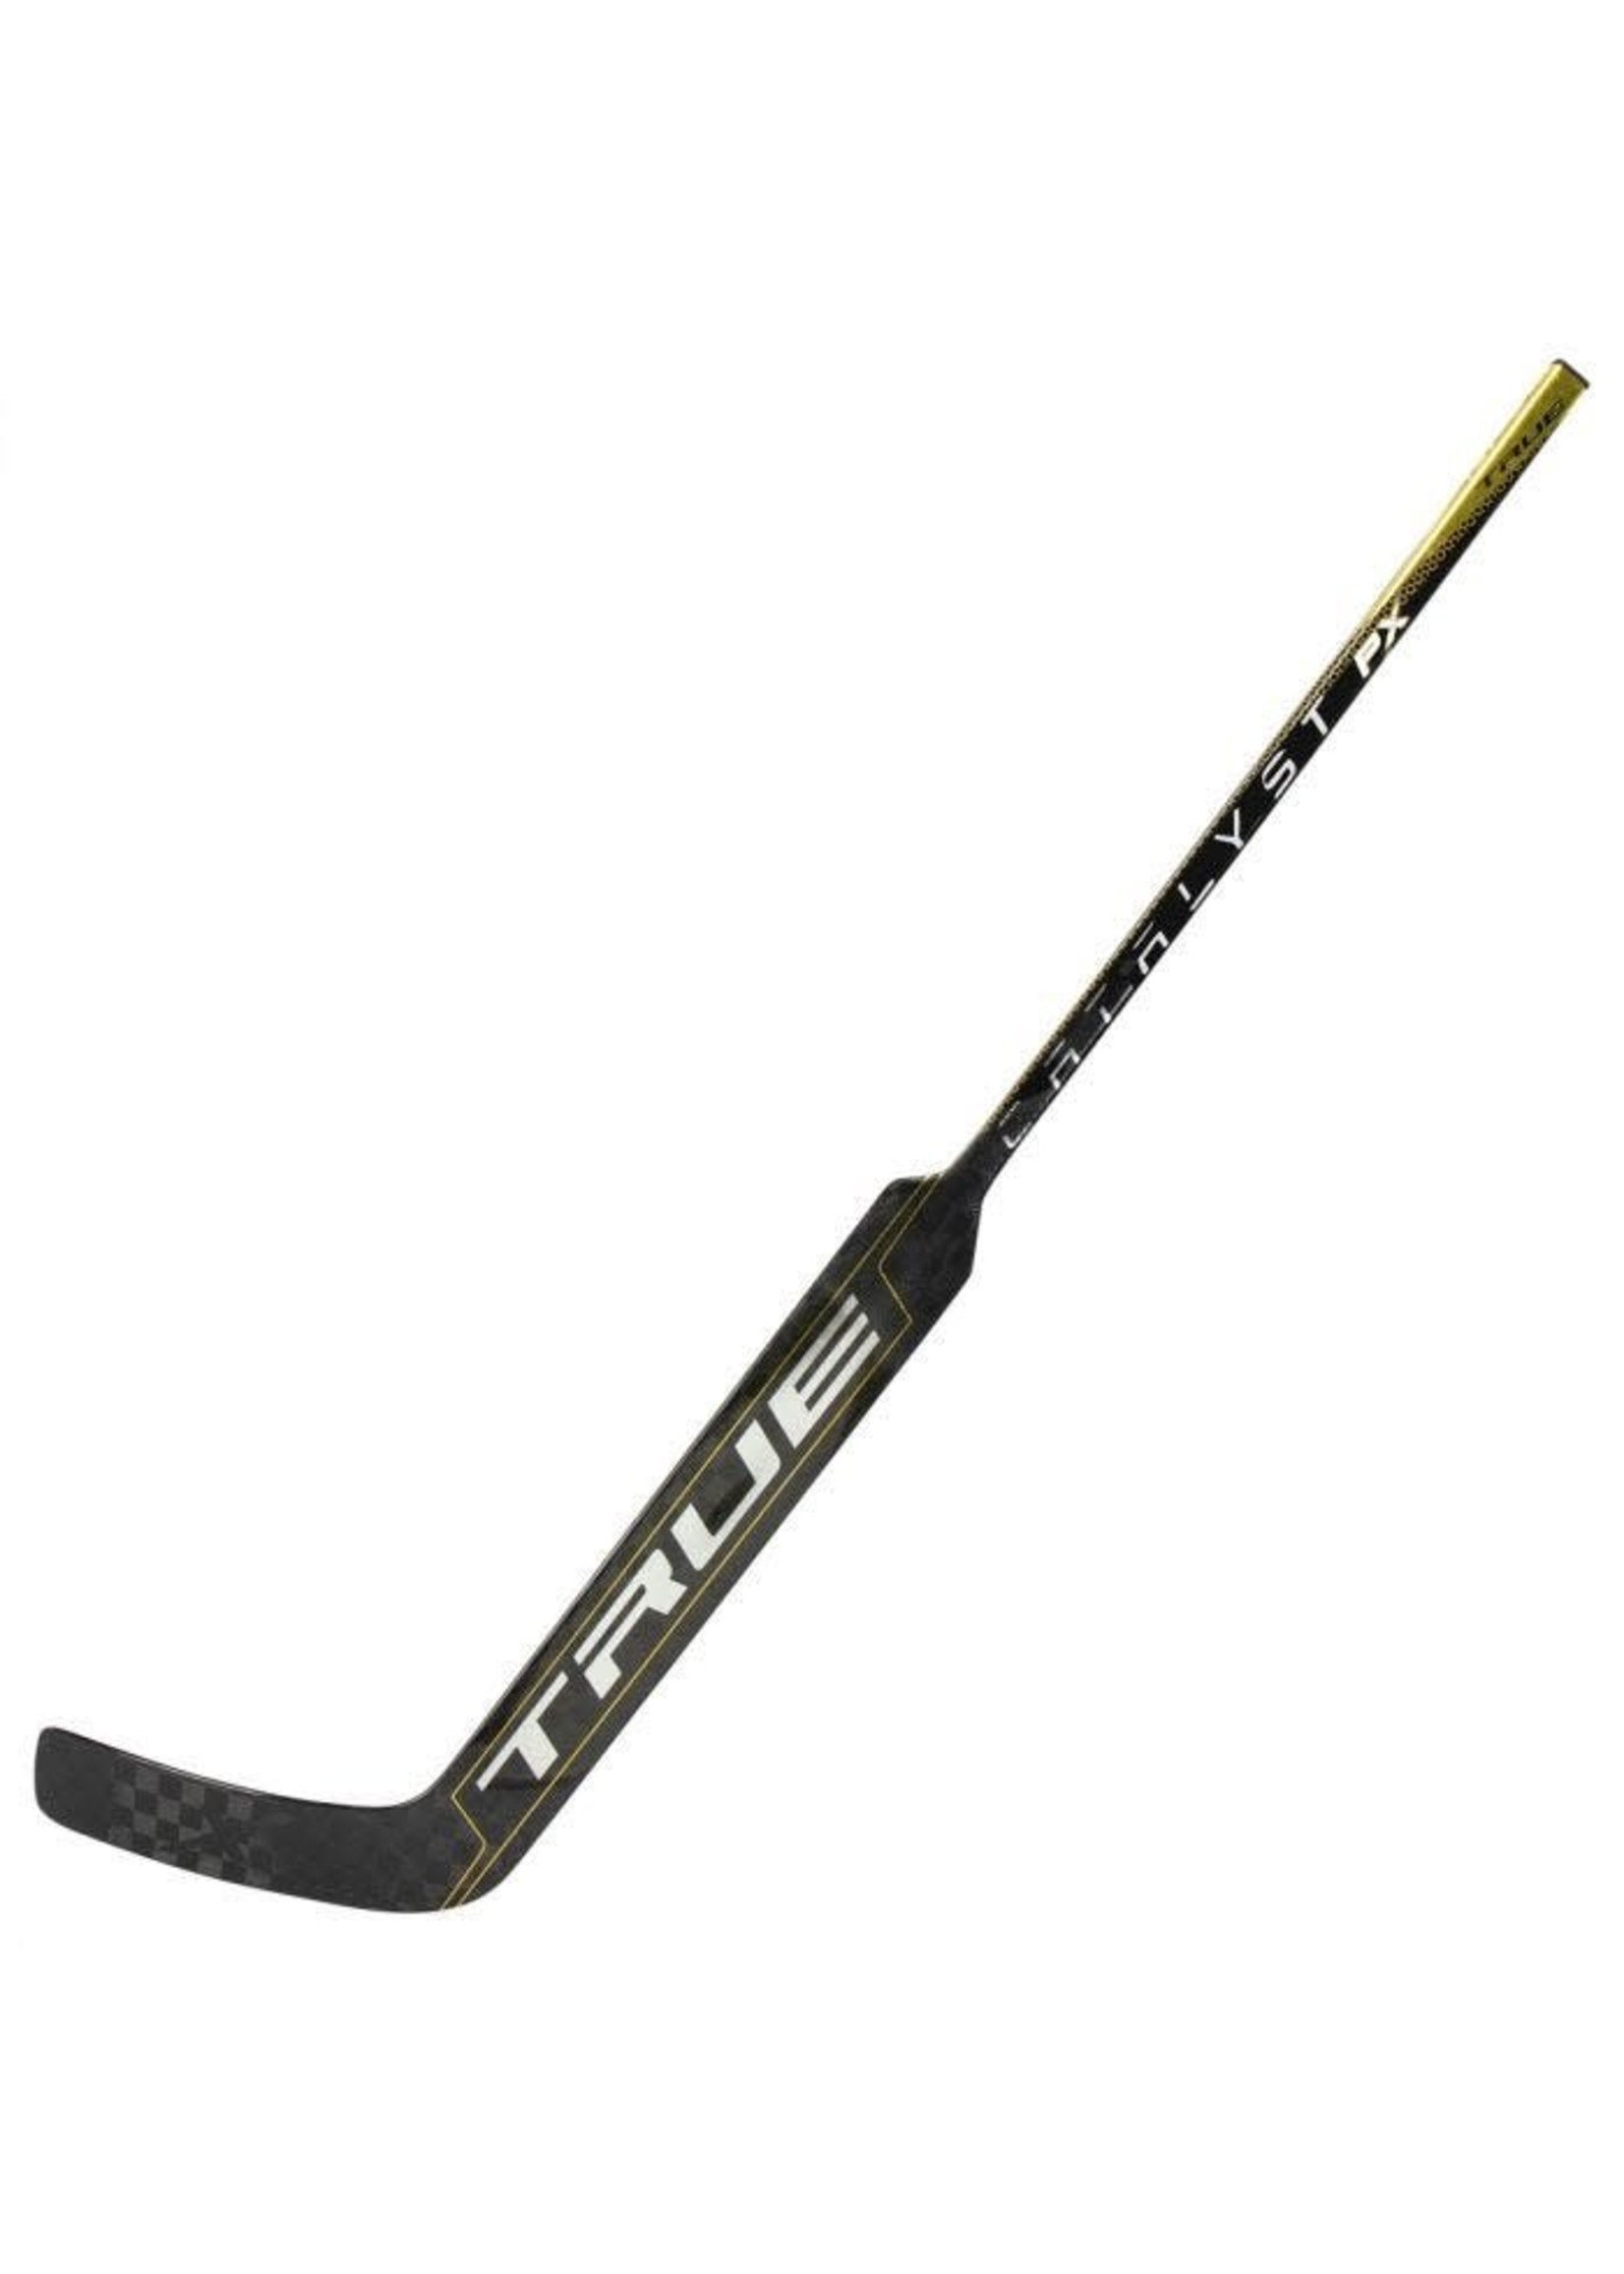 True Hockey TRUE Catalyst PX Goal Stick